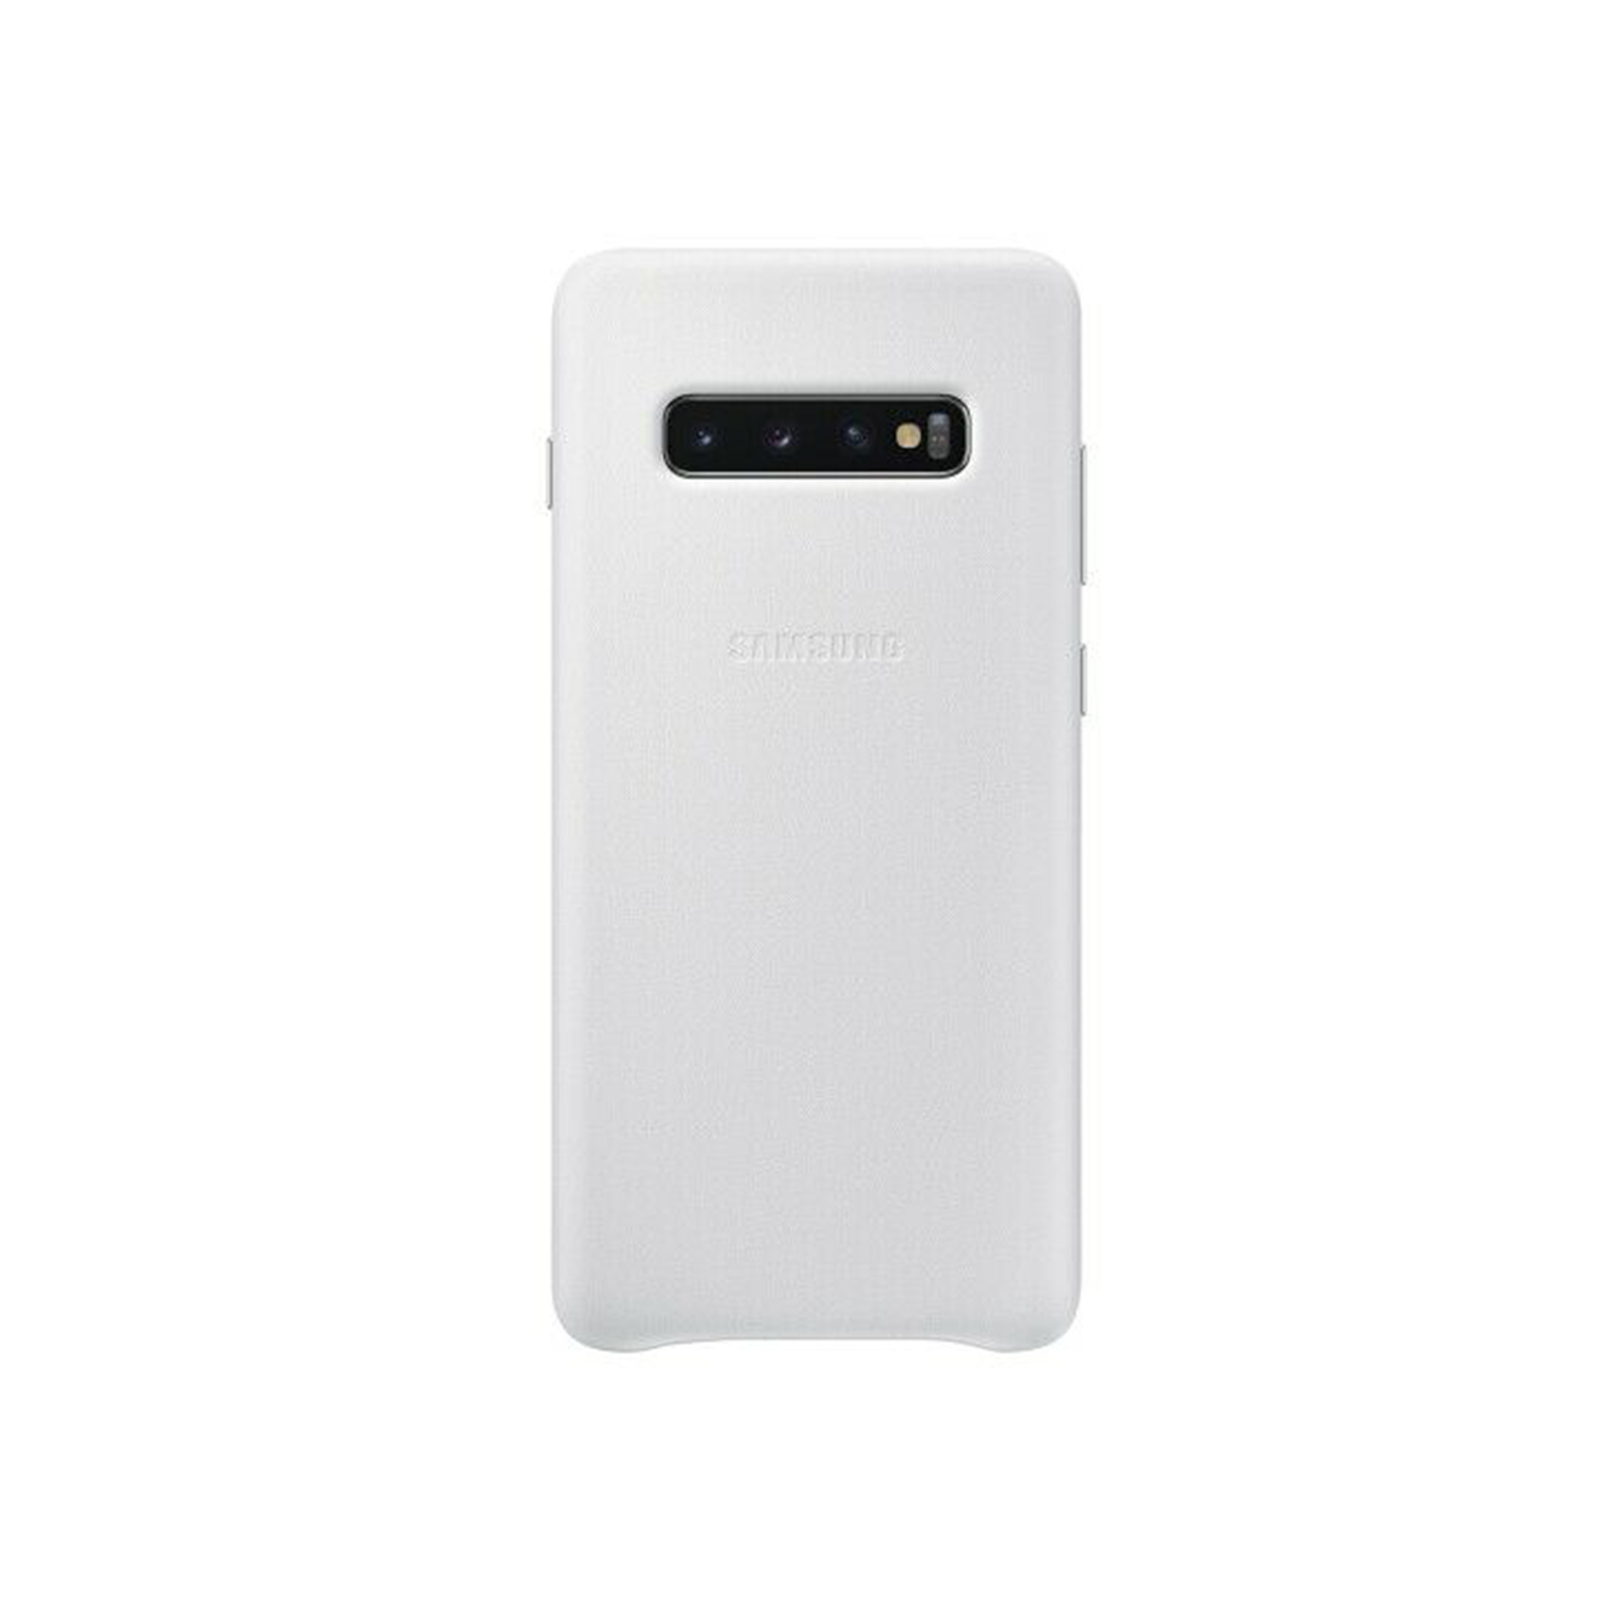 Backcover, LEATHER S10+, EF-VG975LWEGWW Weiß Galaxy WHITE, COVER SAMSUNG S10+ Samsung,